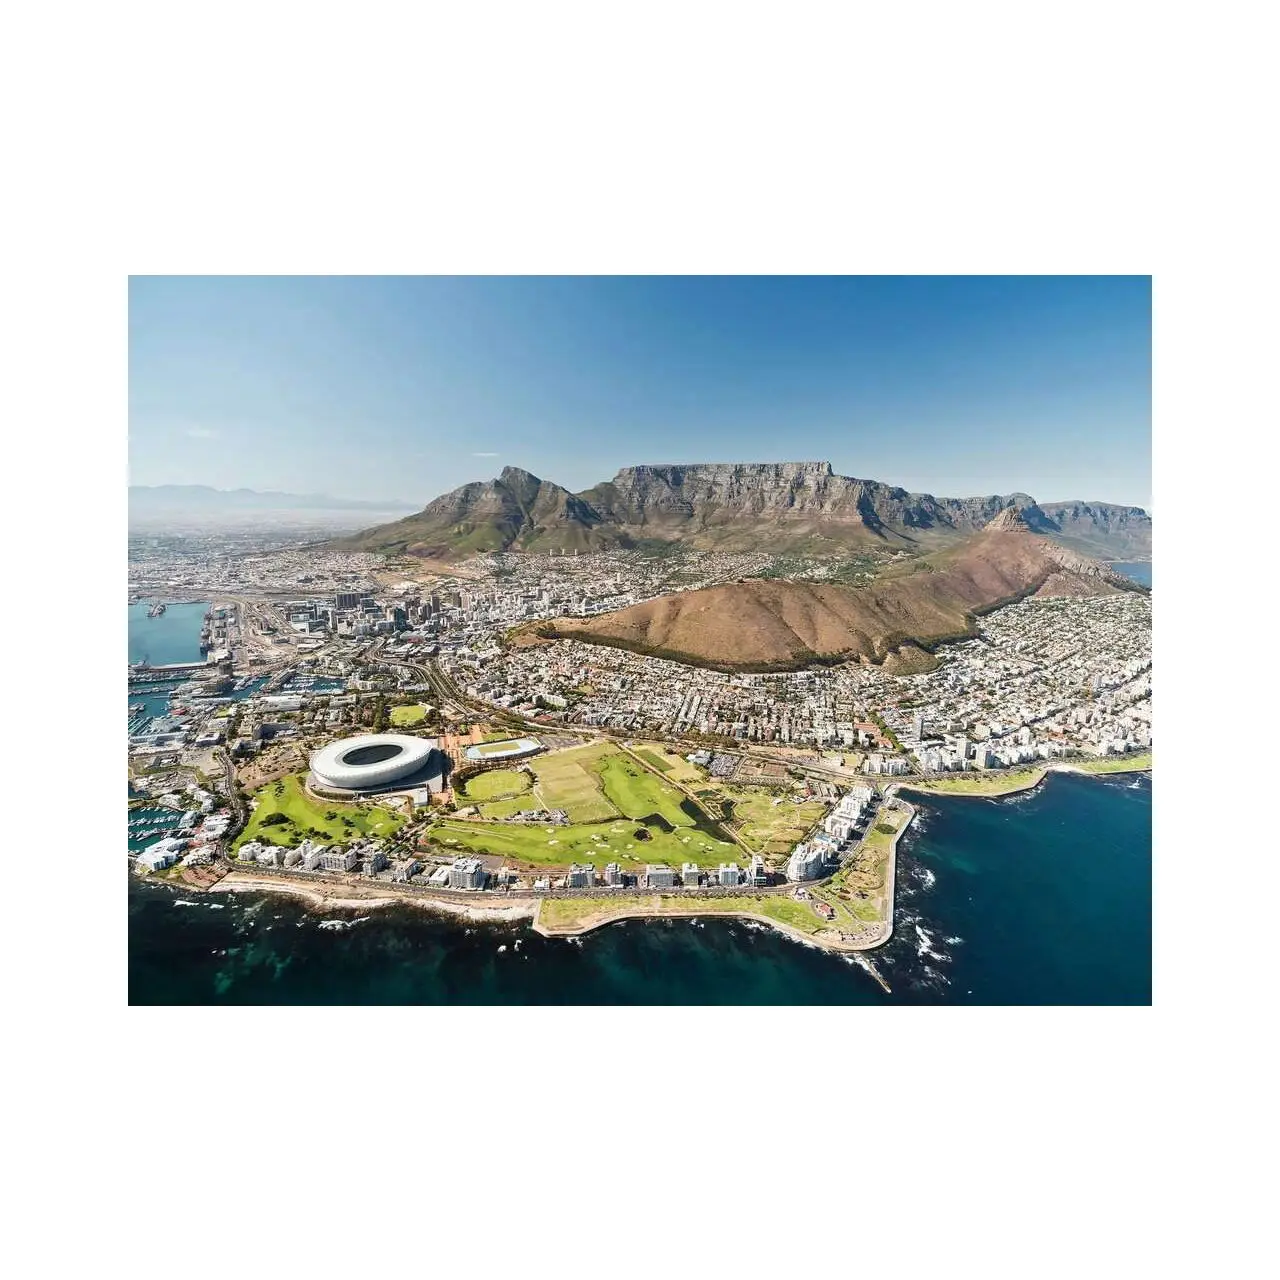 1000 Puzzle Kapstadt S眉dafrika Teile